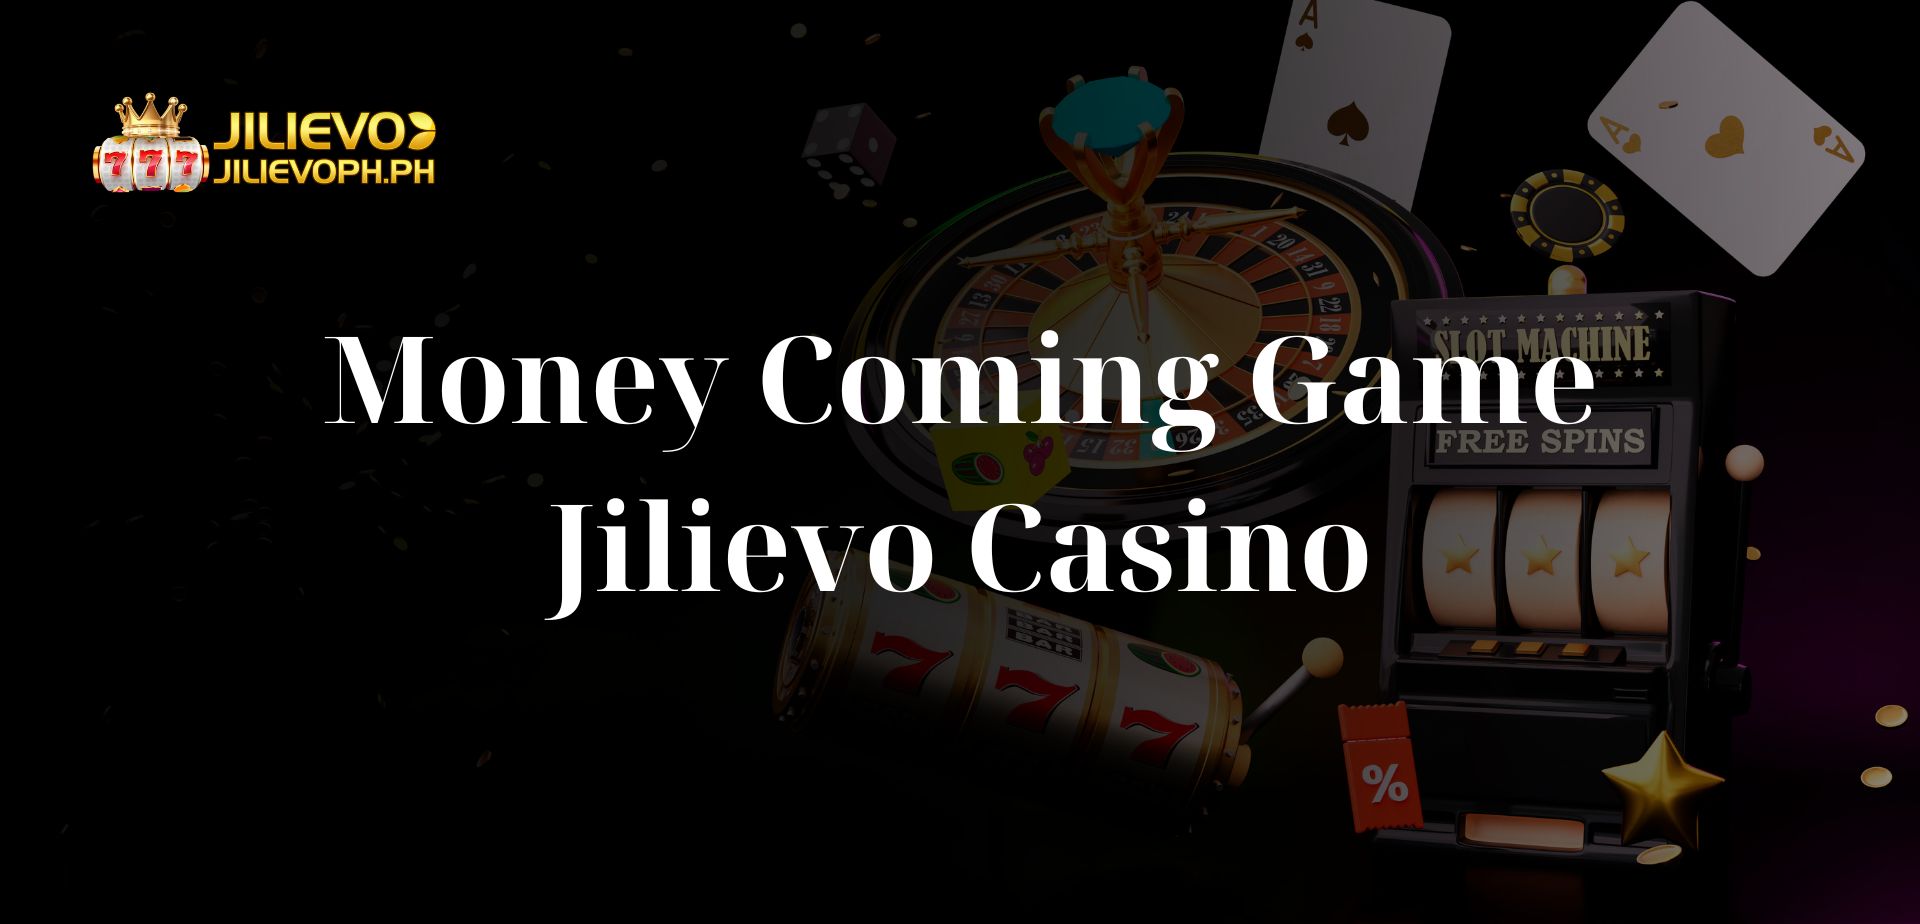 Money Coming Game Jilievo Casino - Introduction To The Money Coming Game At Jilievo Casino